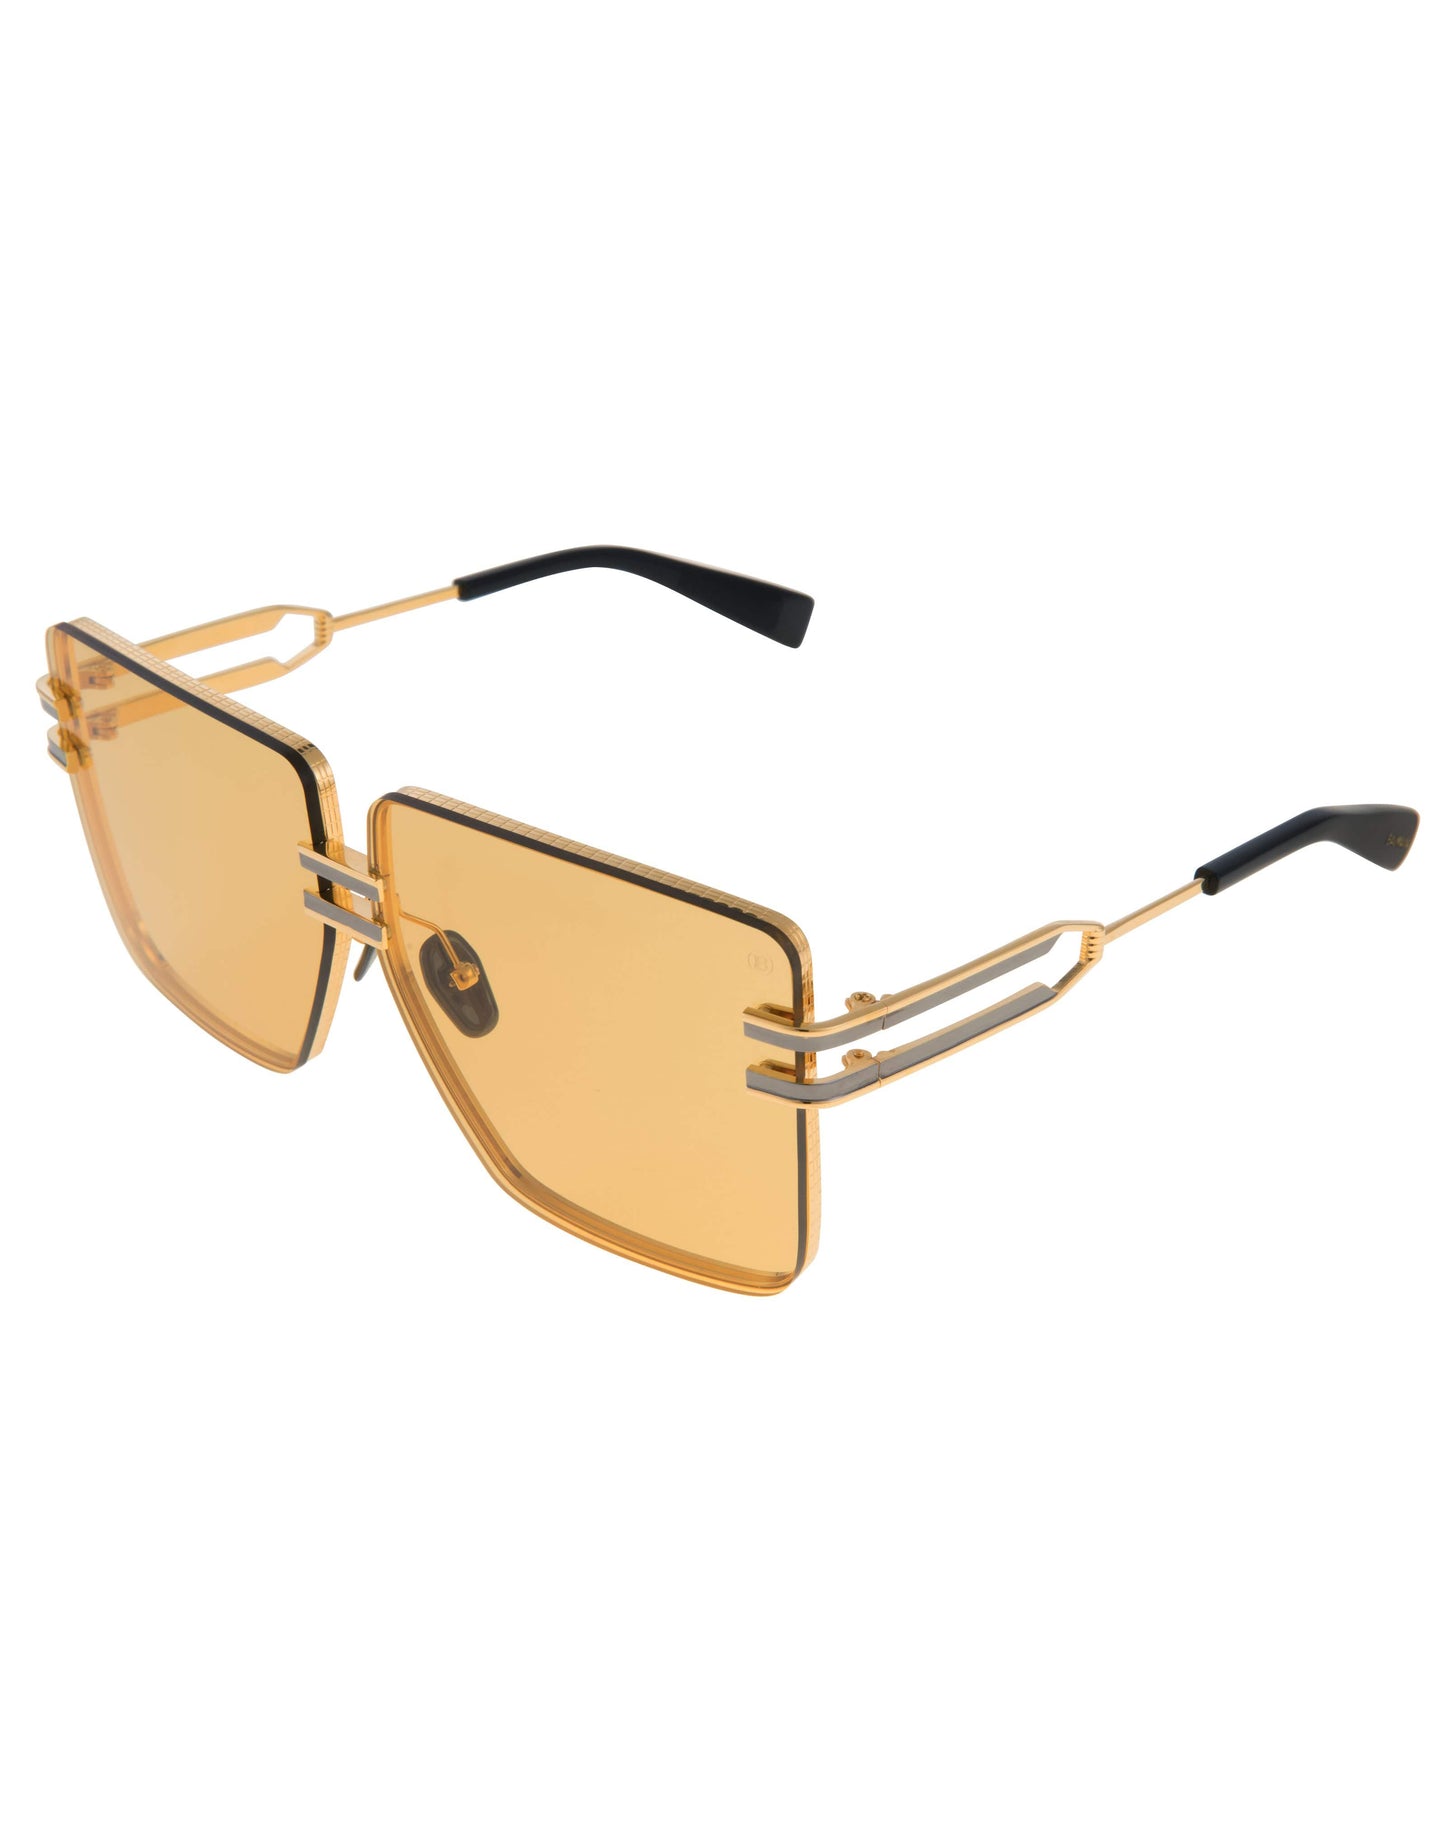 BALMAIN-Gendarme Gold and Amber Unisex Sunglasses-GLD/BLK